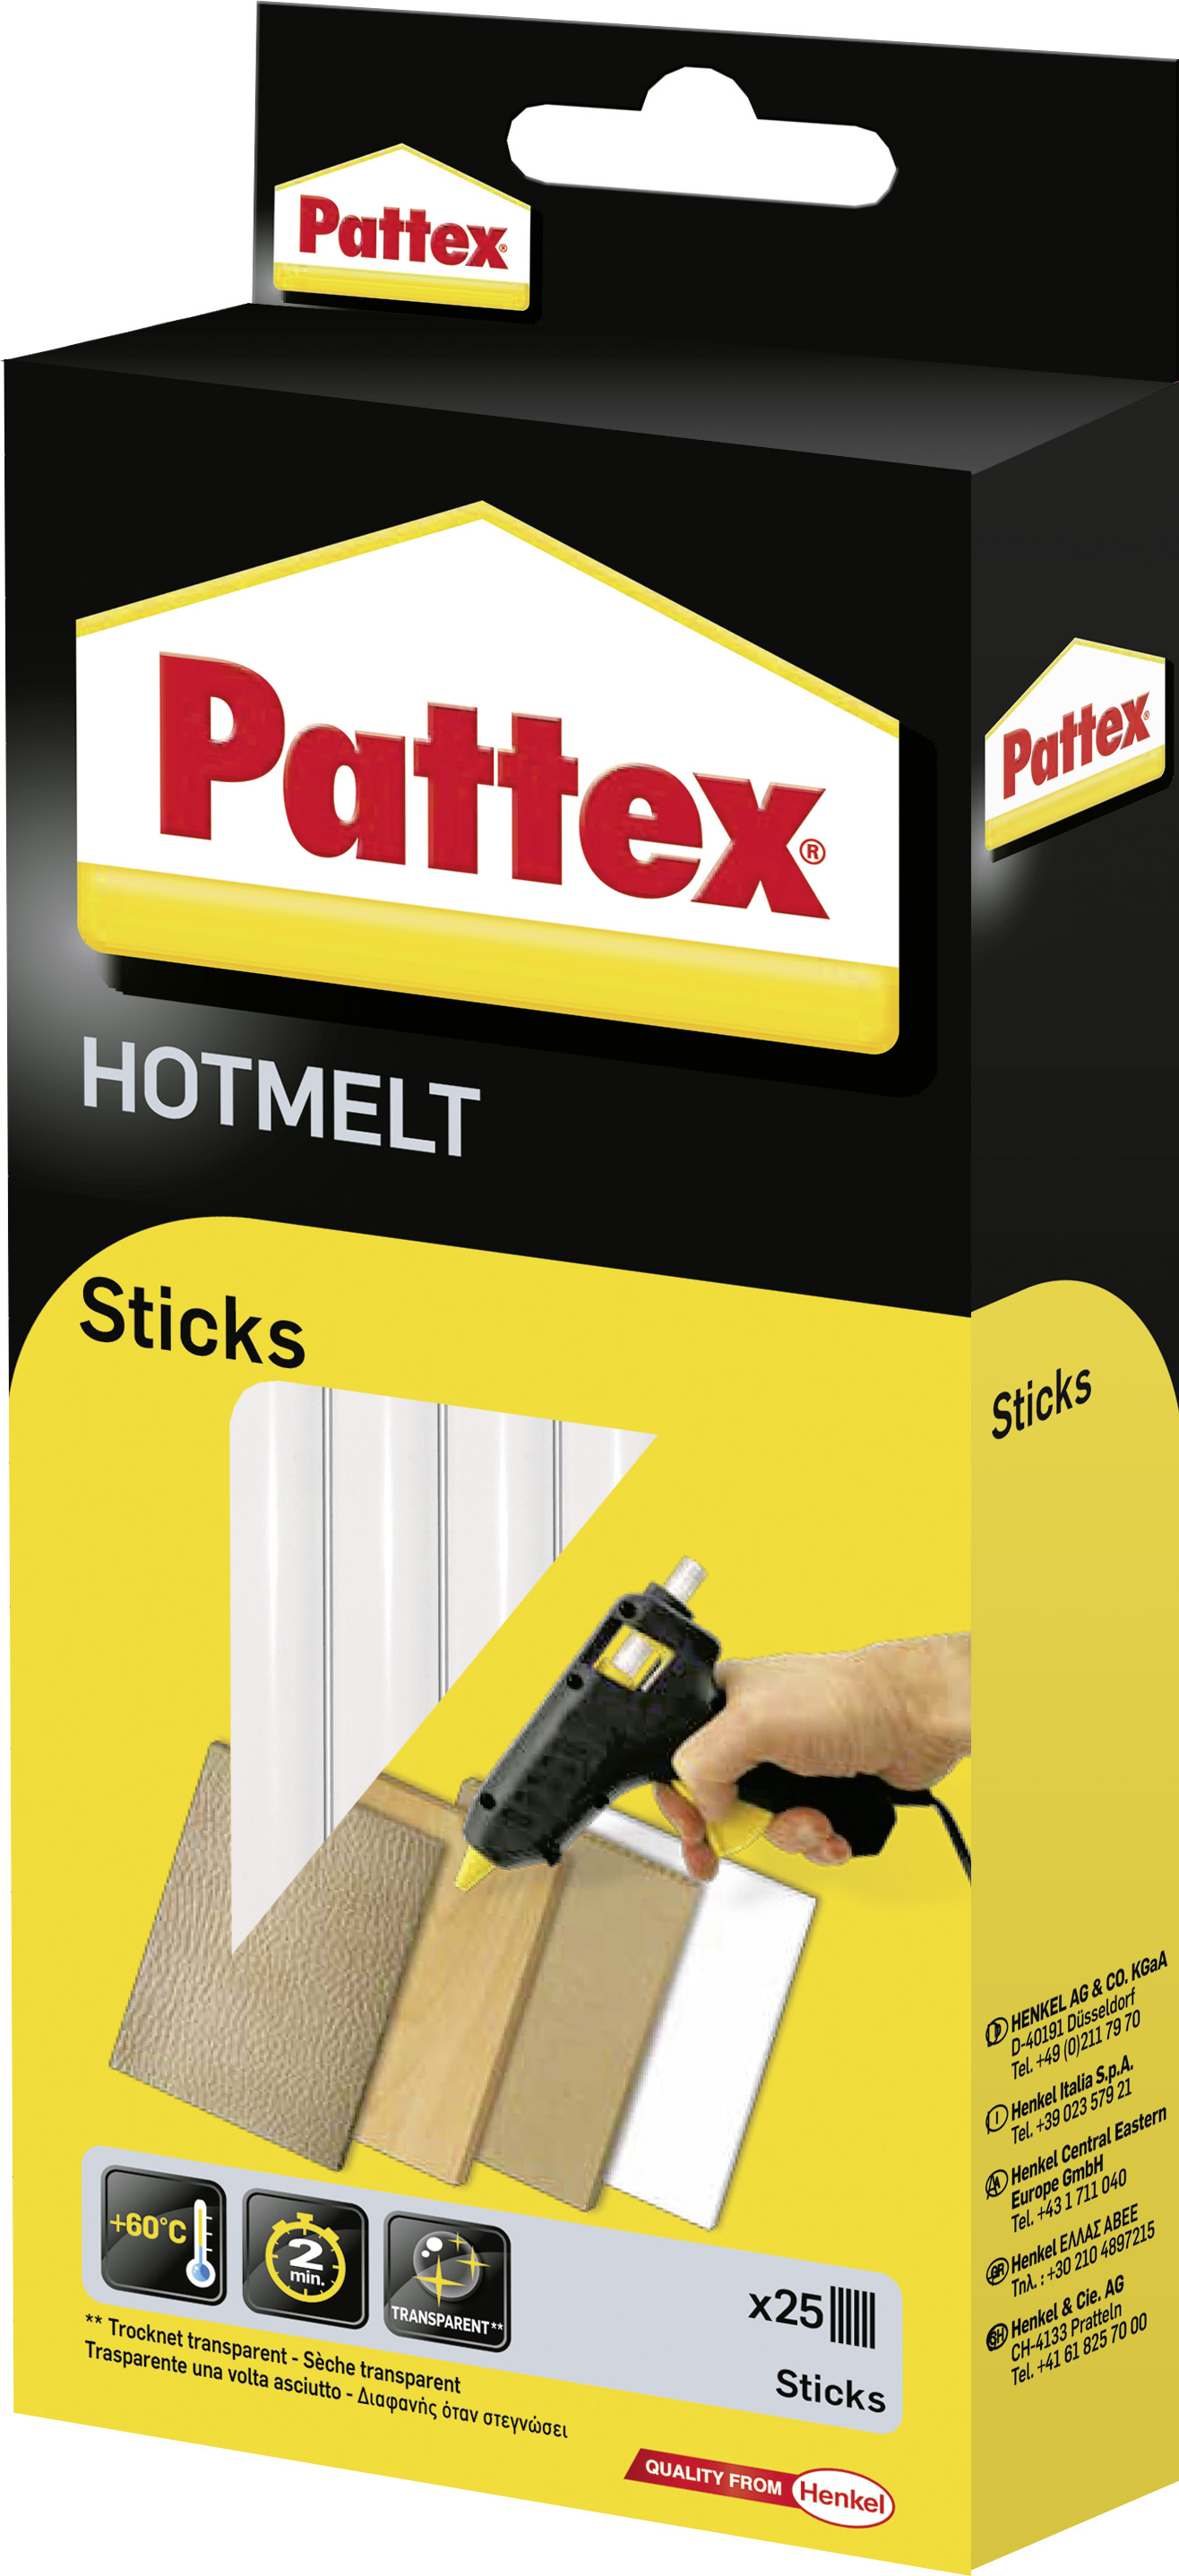 Pattex Supermatic Sticks Hotmelt 25 Sticks Heißklebesticks